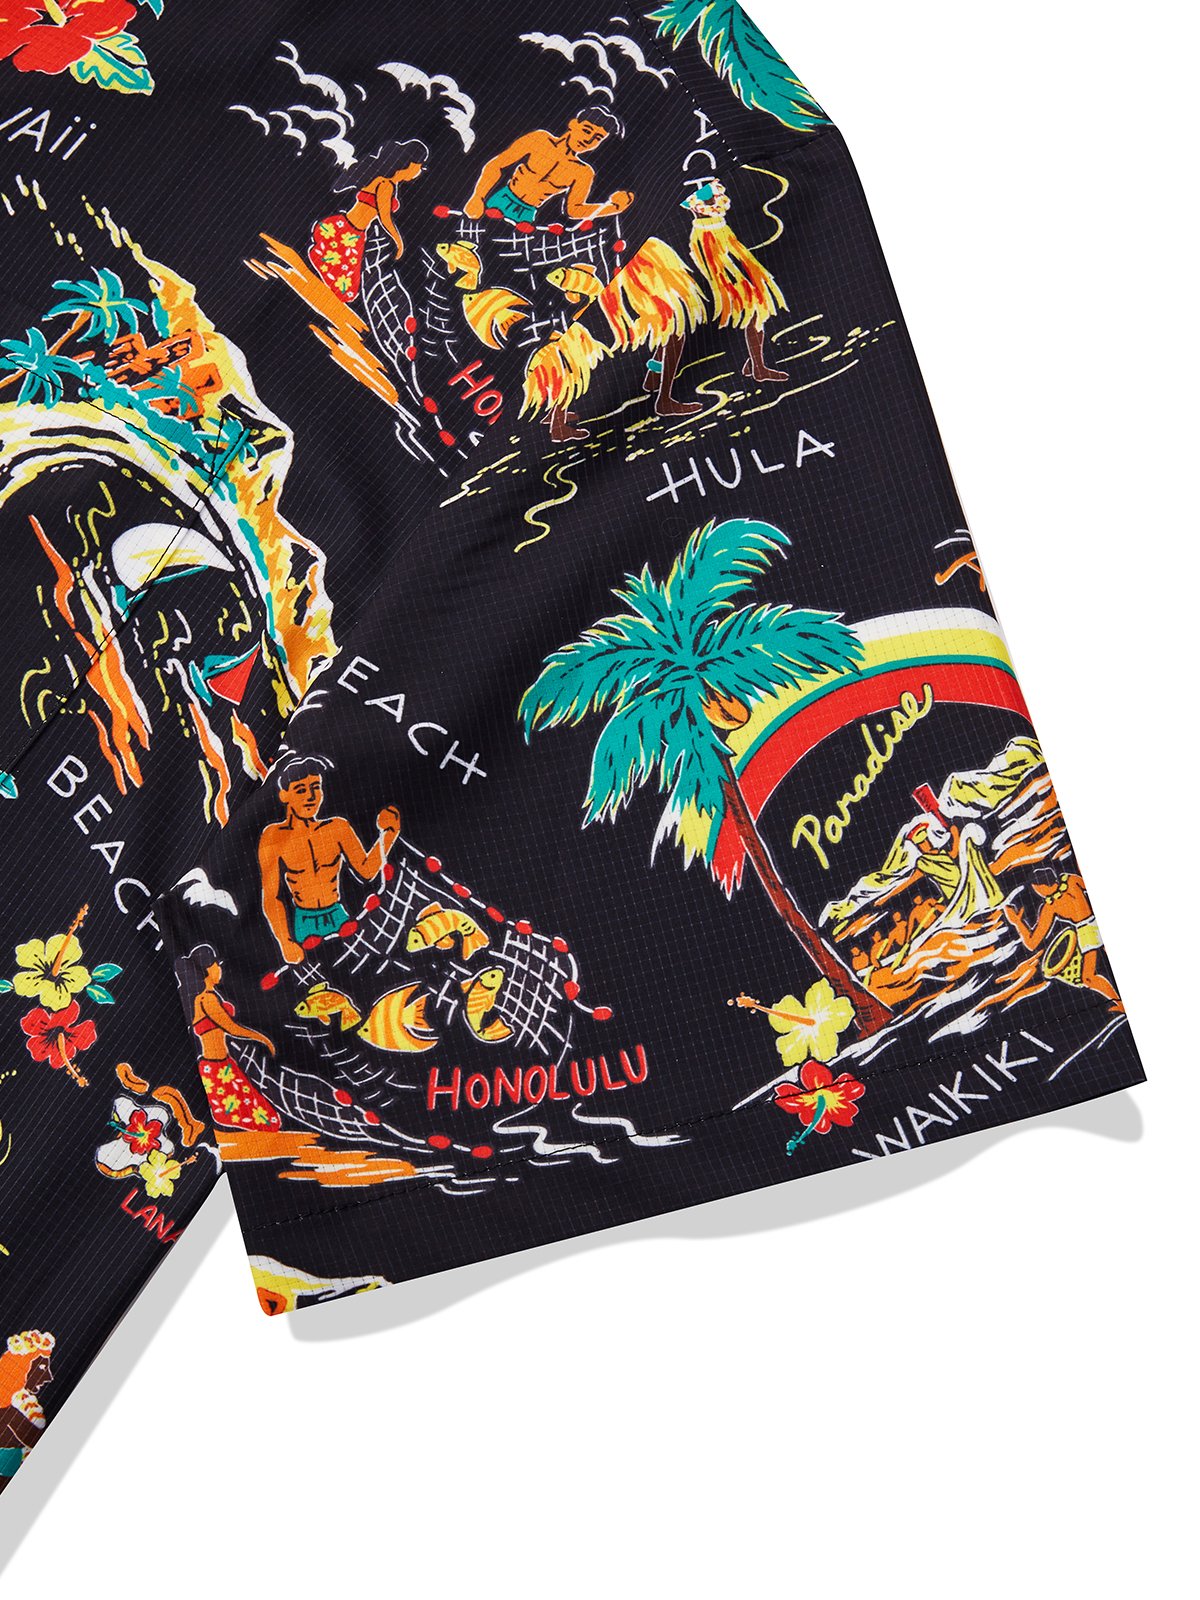 Royaura® Customized Hawaii Japanese Style Poster Print Men's Hawaiian Shirt Stretch Pocket Camping Shirt Big Tall